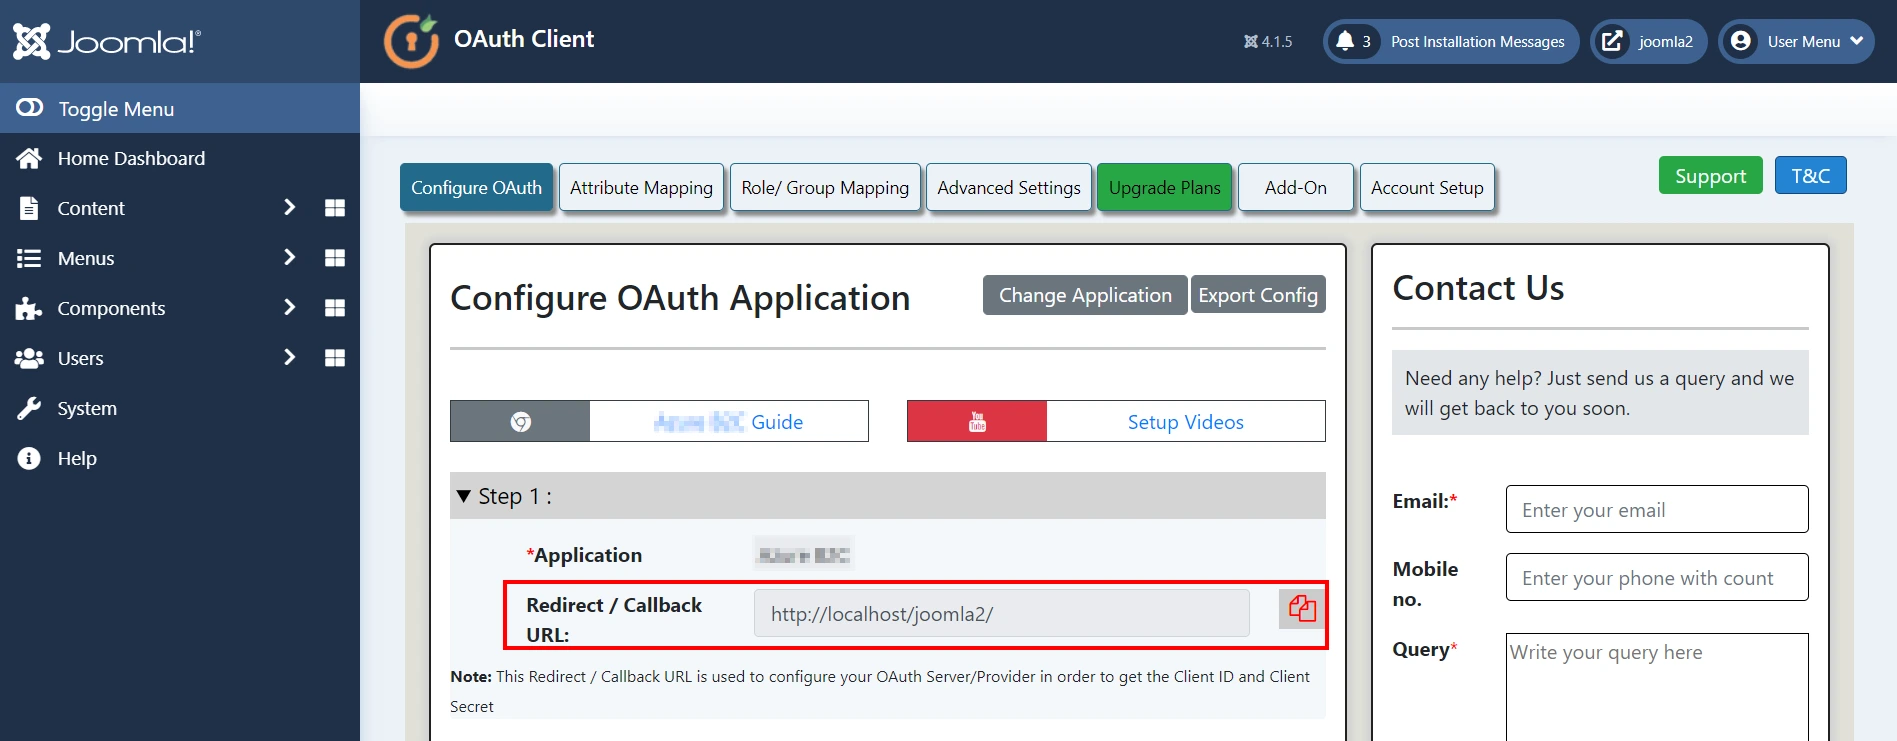 Strava Single Sign-On (SSO) OAuth/OpenID